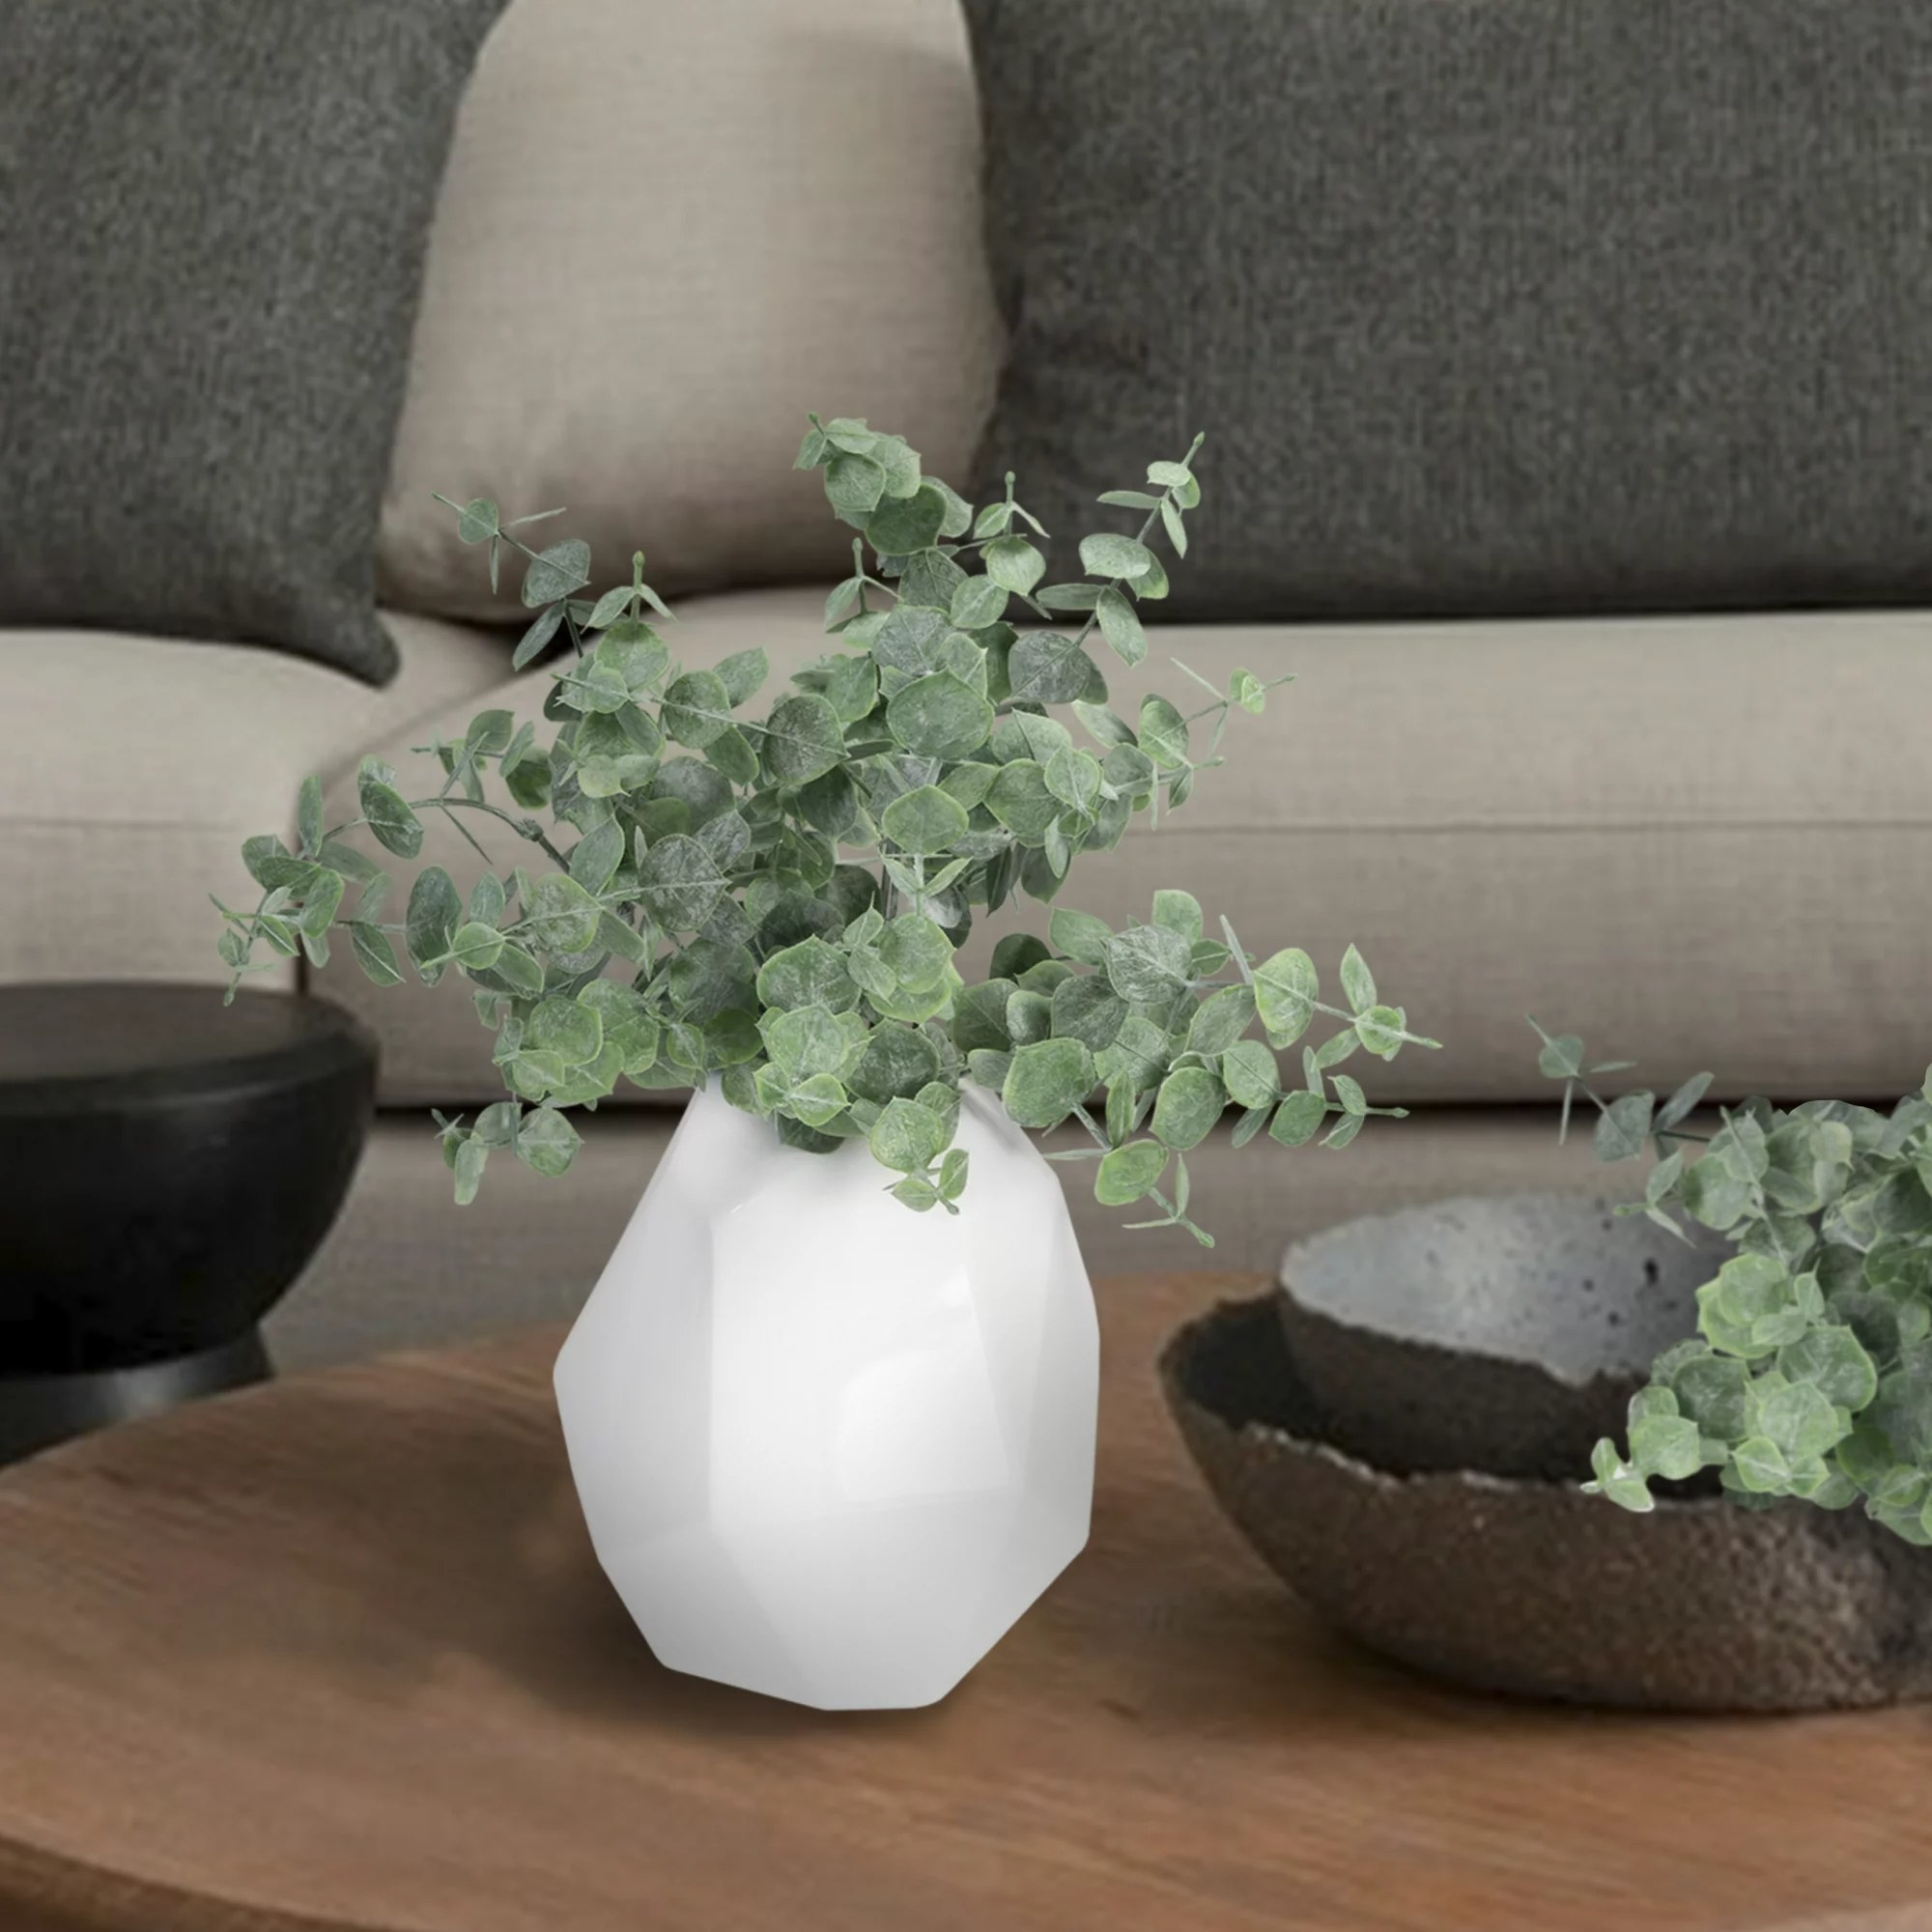 The faux eucalyptus plant in a white vase